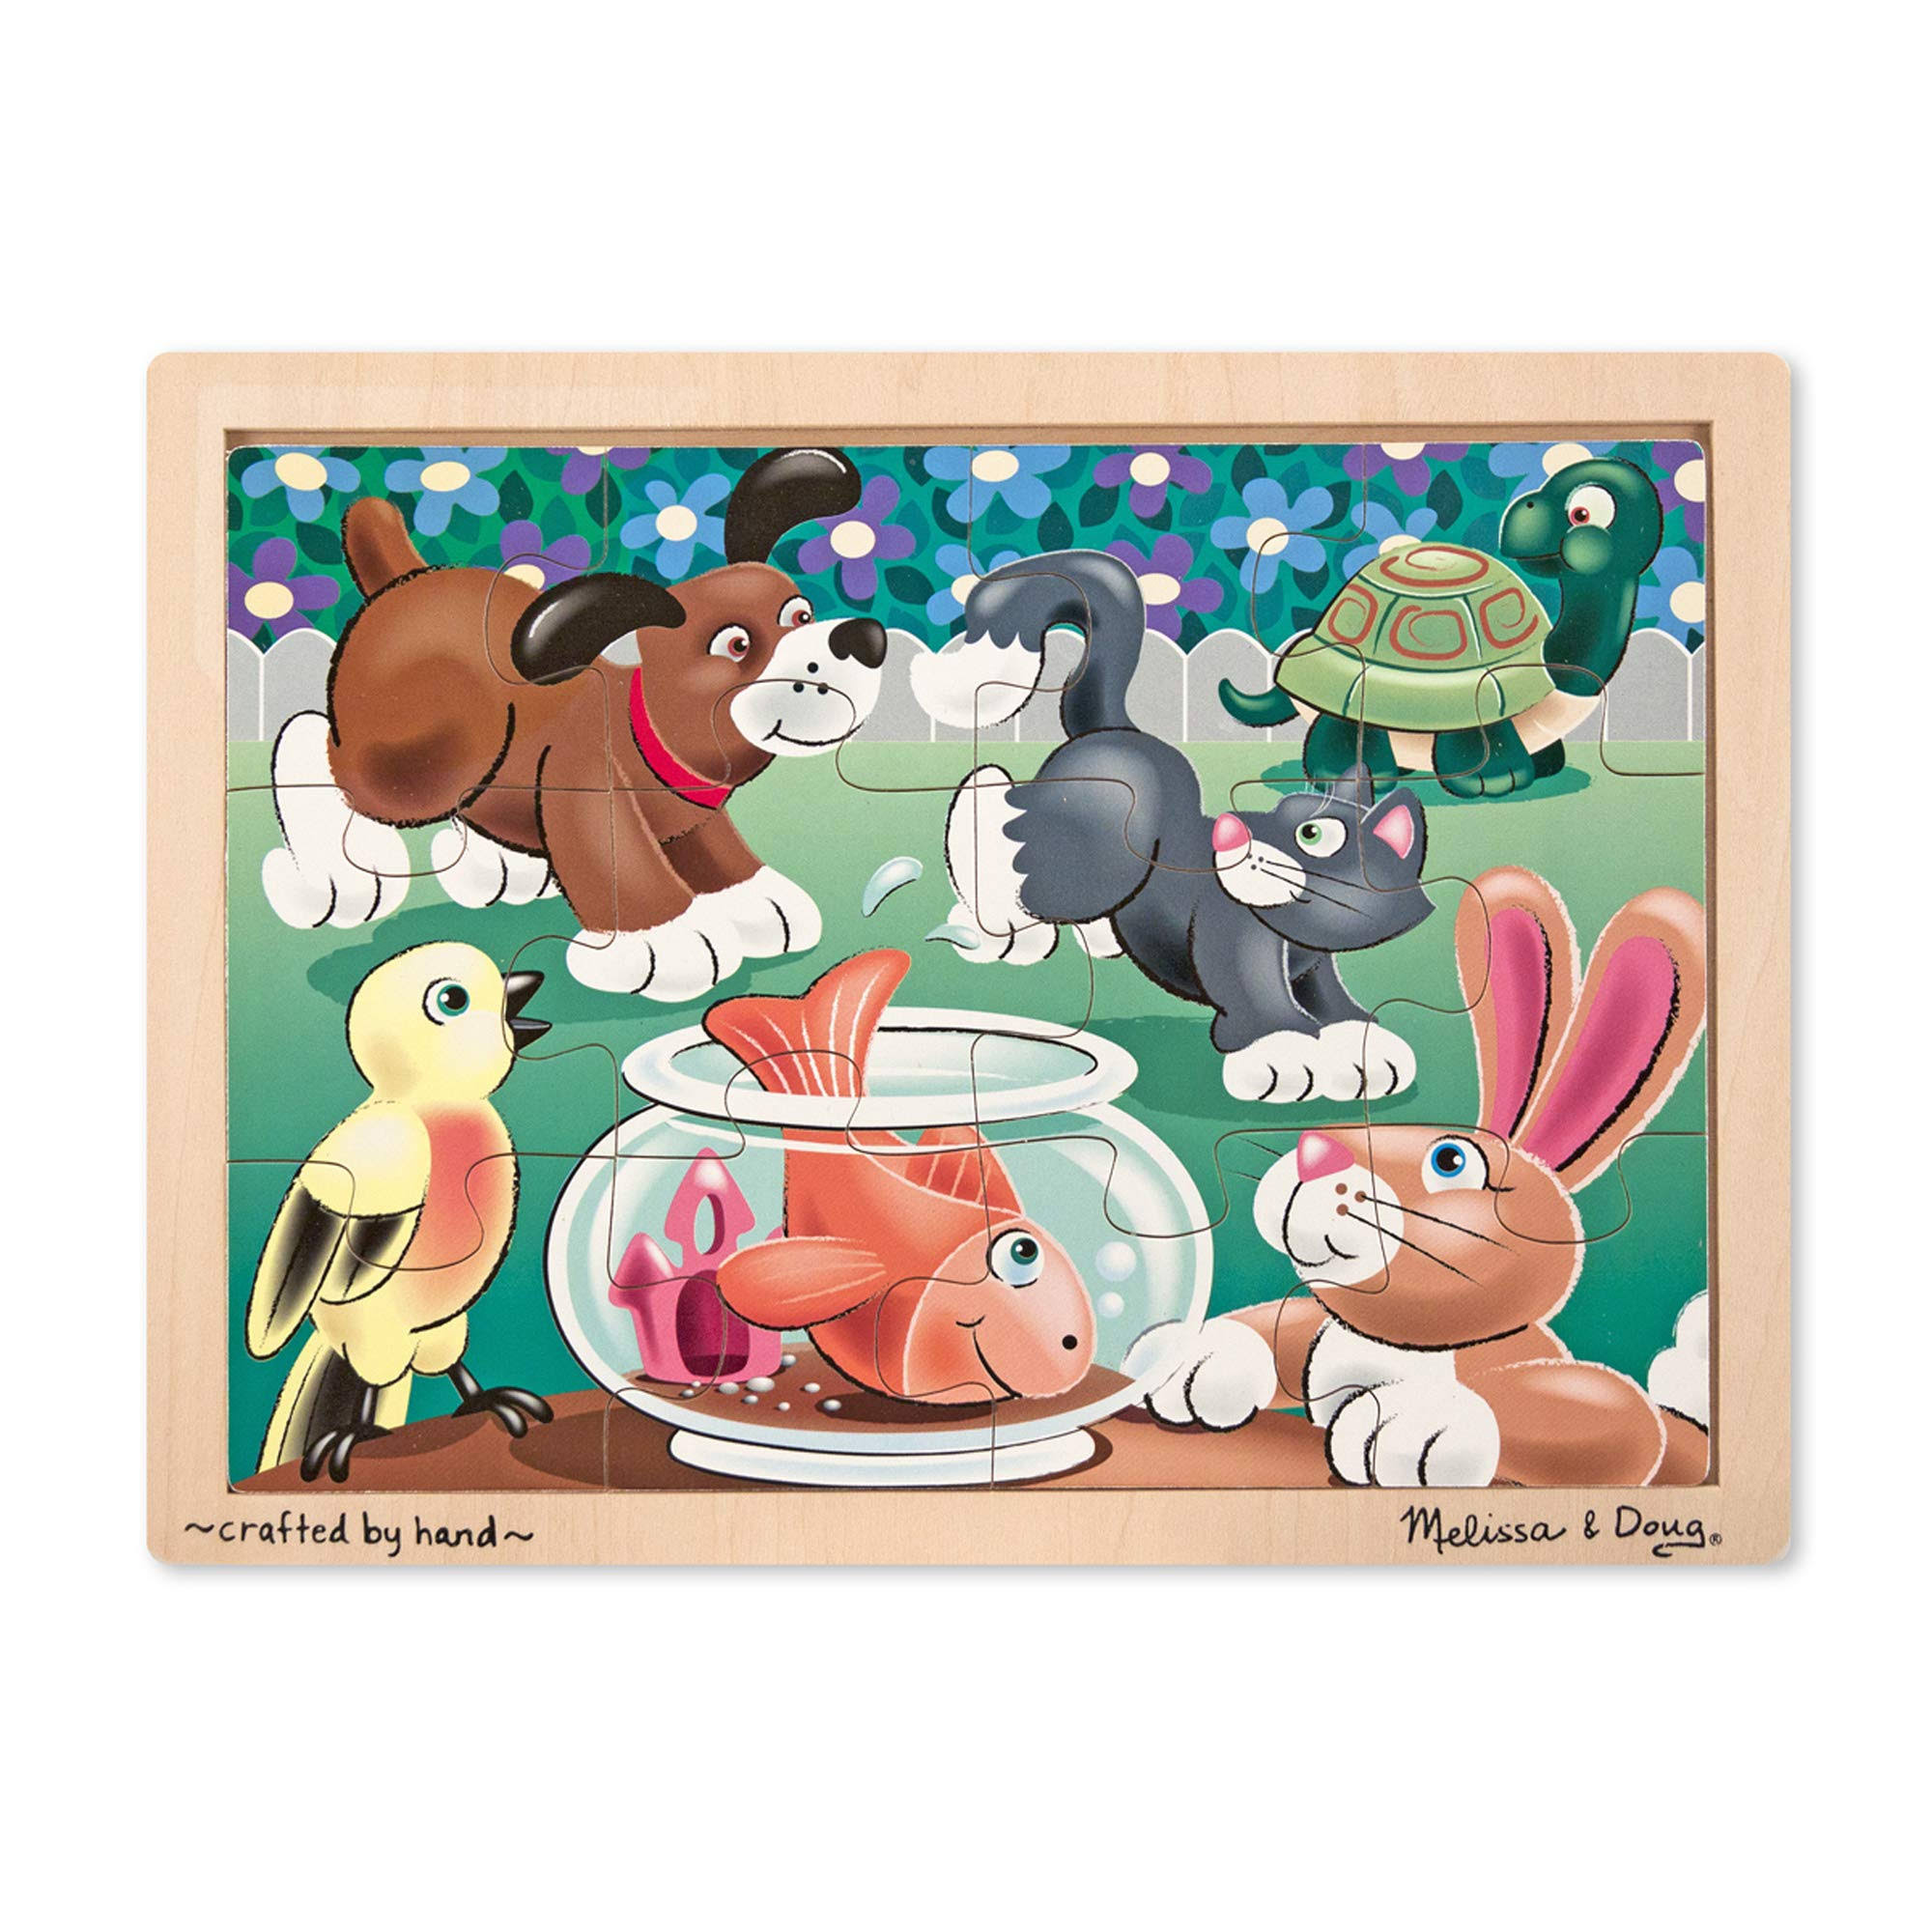 Melissa and Doug Wooden Jigsaw Puzzle - Playful Pets, 12pcs